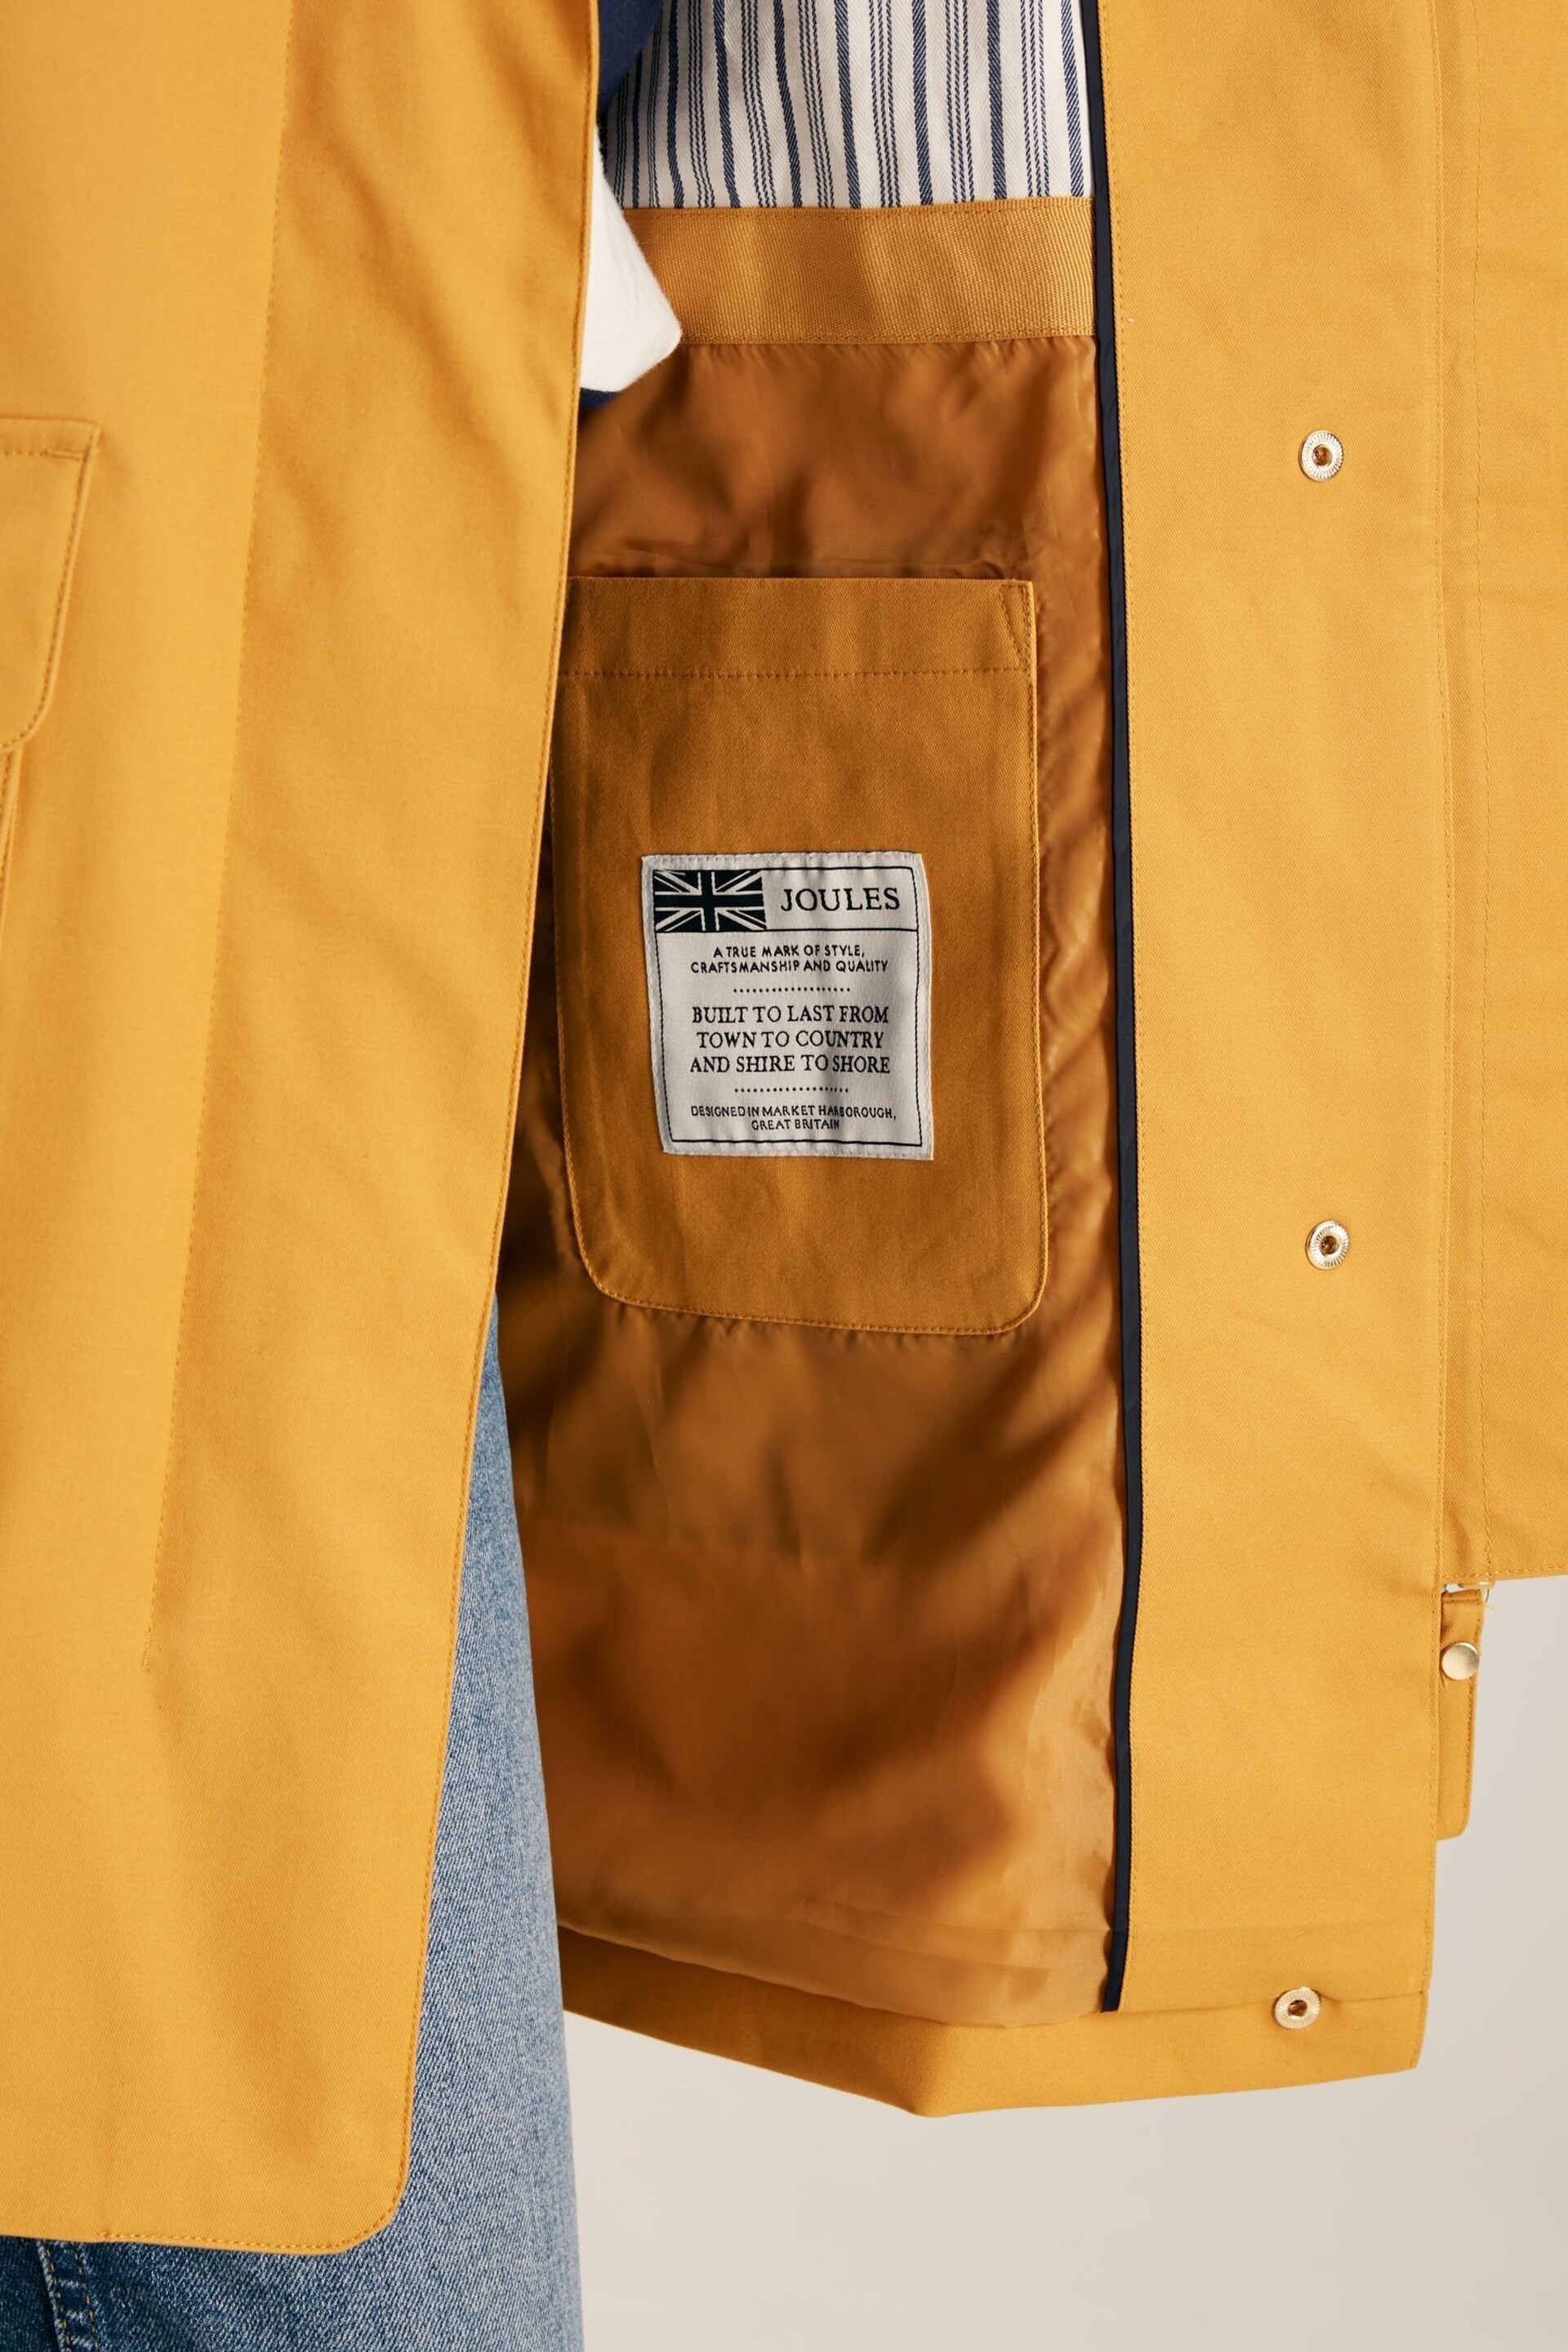 Joules Edinburgh Yellow Premium Waterproof Hooded Raincoat - Image 8 of 10